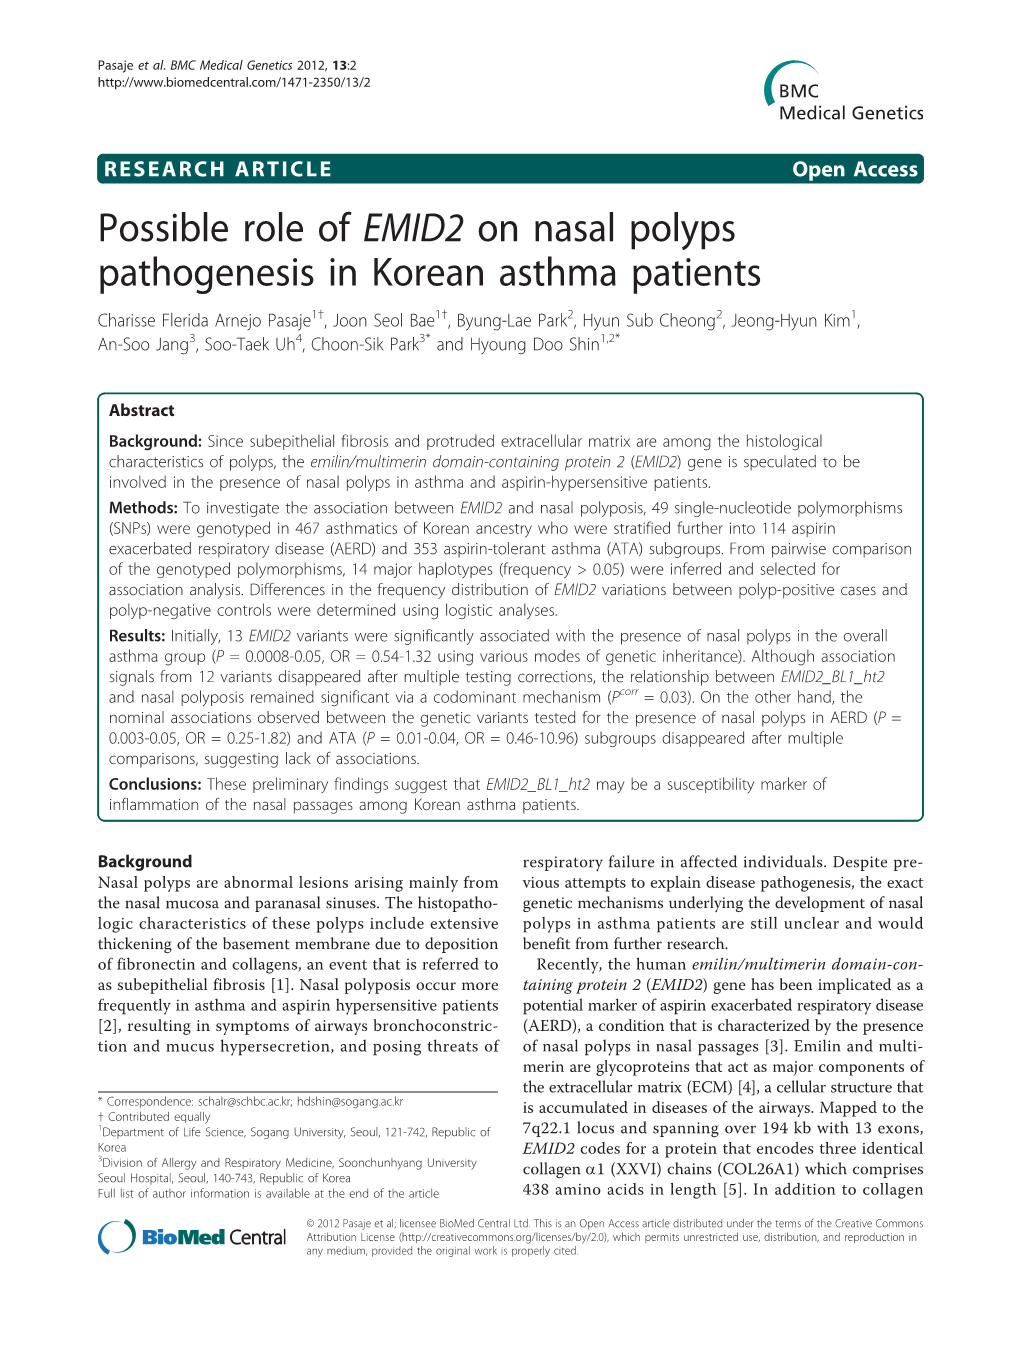 Possible Role of EMID2 on Nasal Polyps Pathogenesis in Korean